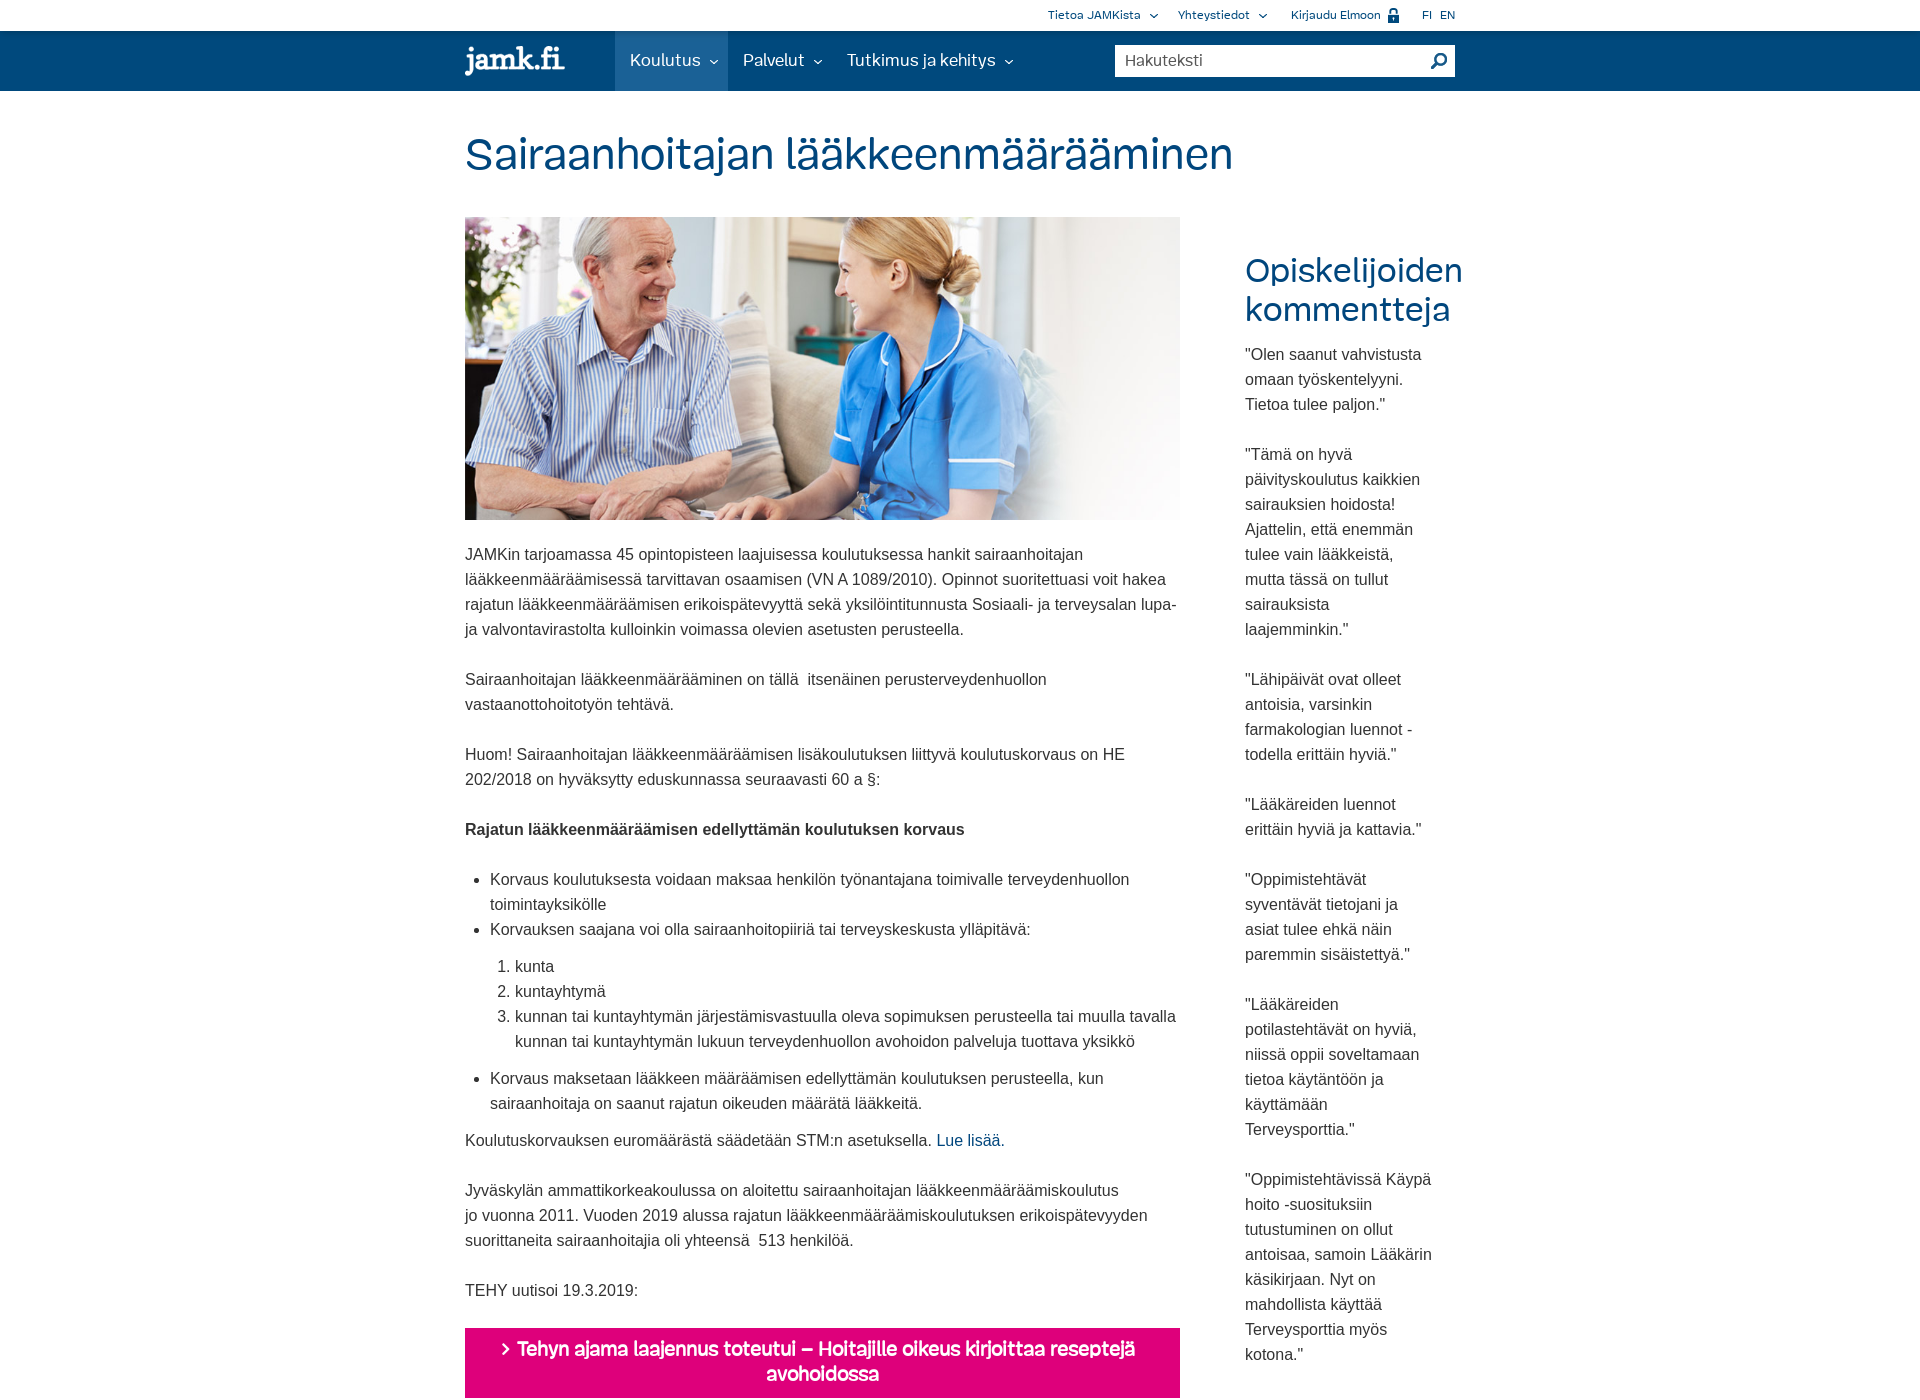 Screenshot for rajattulaakkeenmaaraaminen.fi